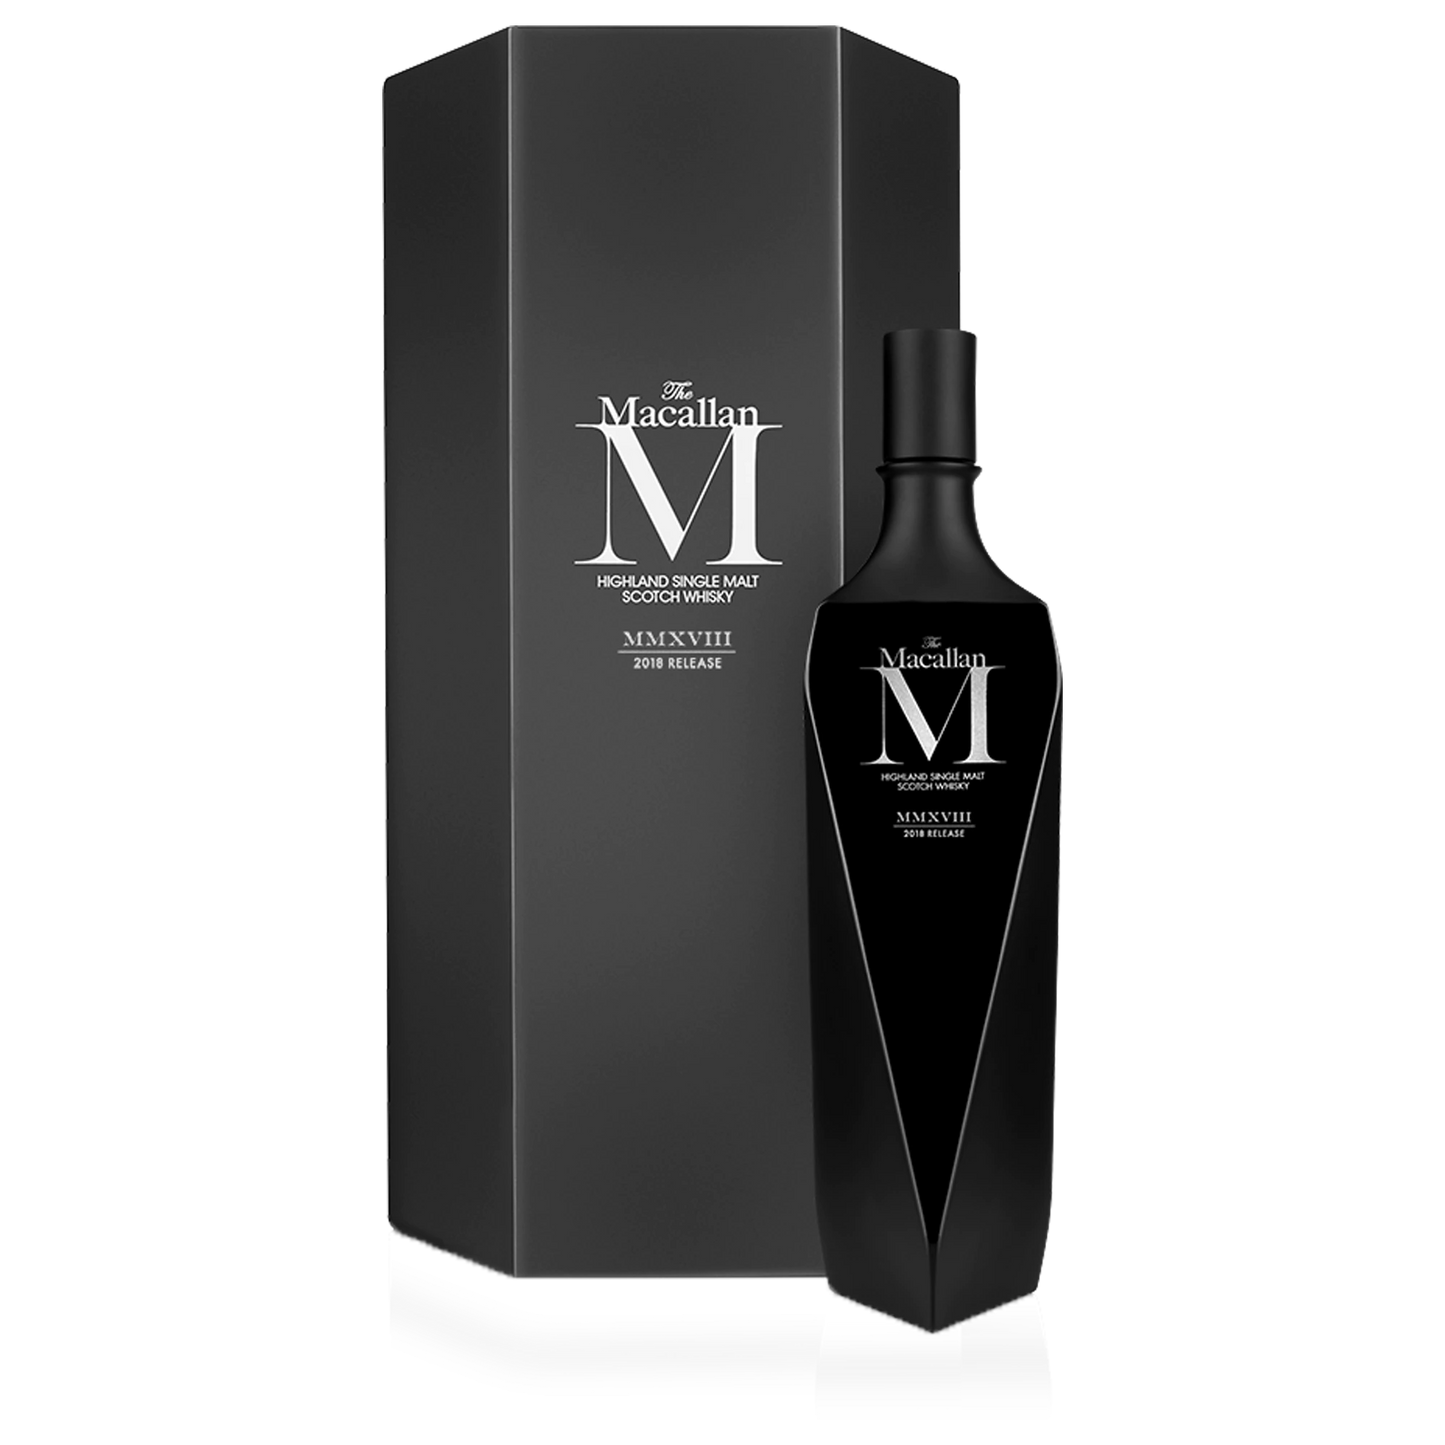 The Macallan M Black Decanter Single Malt Scotch Whisky 700ml